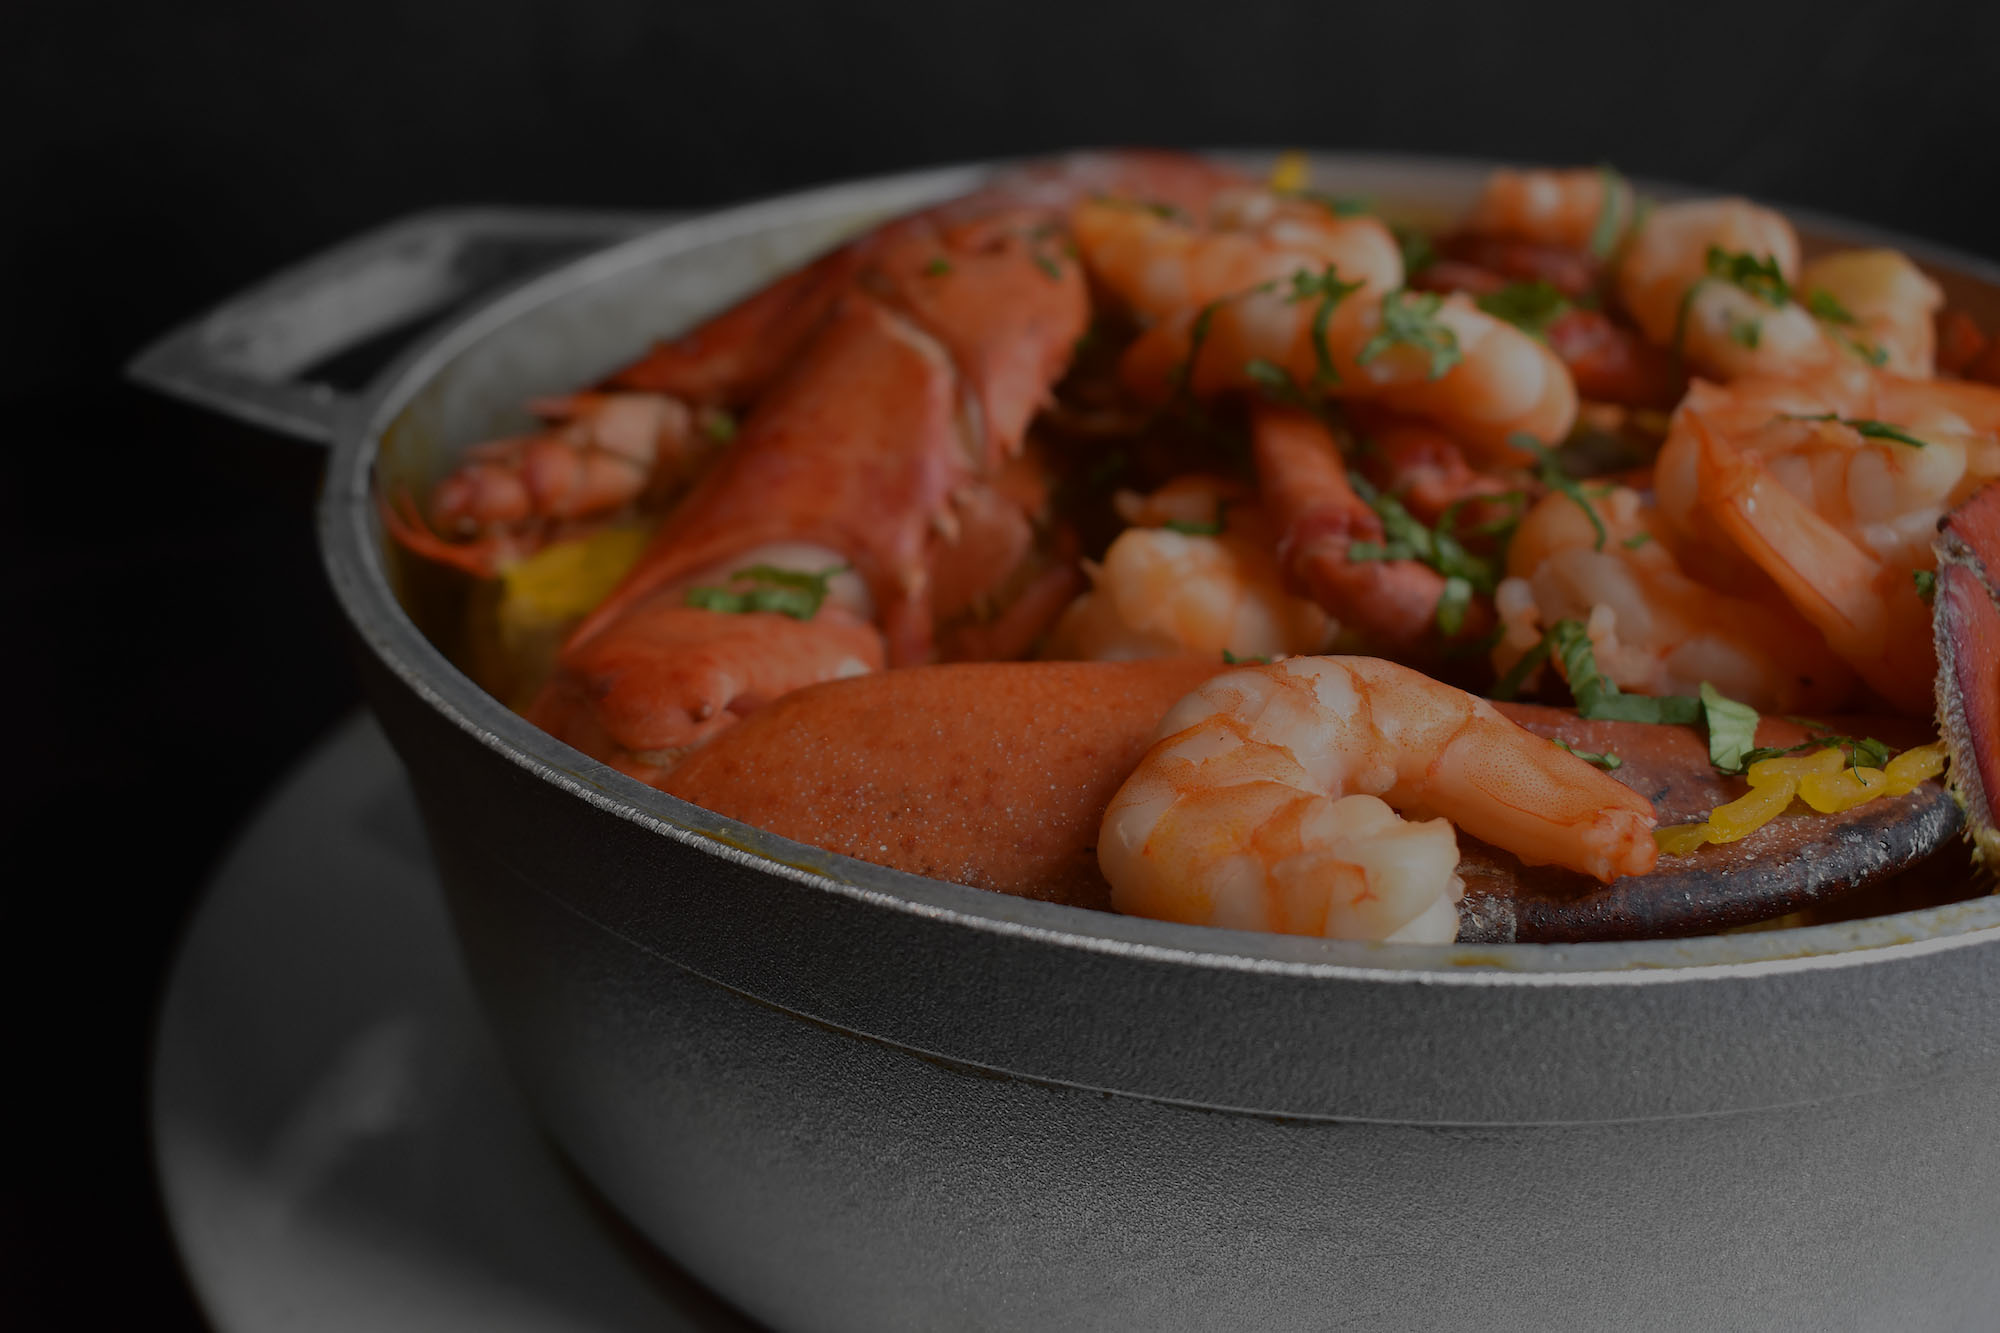 A shrimp dish